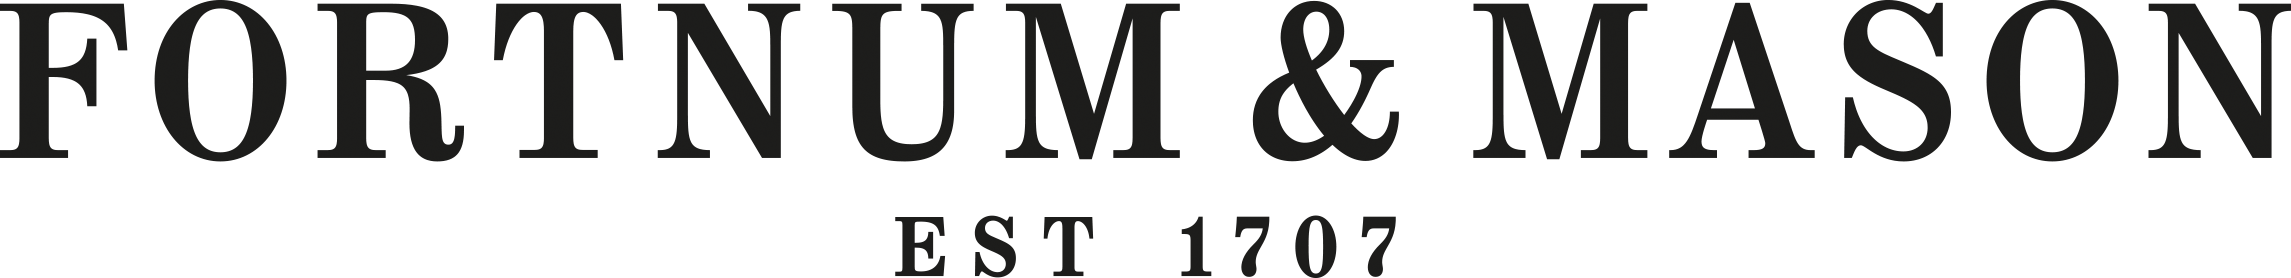 Image result for fortnum and mason logo